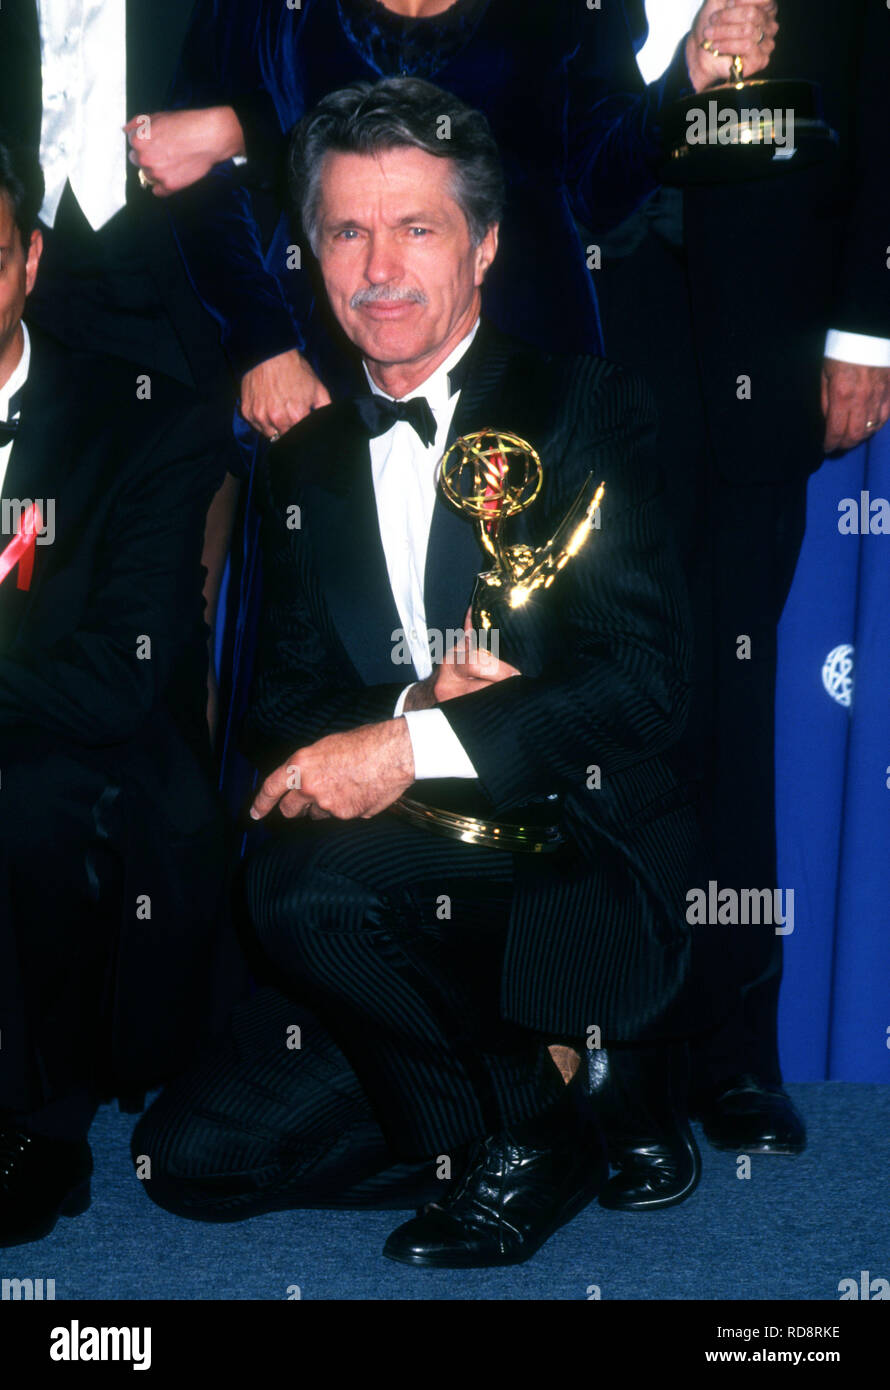 PASADENA, CA - SEPTEMBER 19: Actor Tom Skerritt attends the 45th Annual Primetime Emmy Awards on September 19, 1993 at Pasadena Civic Auditorium in Pasadena, California. Photo by Barry King/Alamy Stock Photo Stock Photo